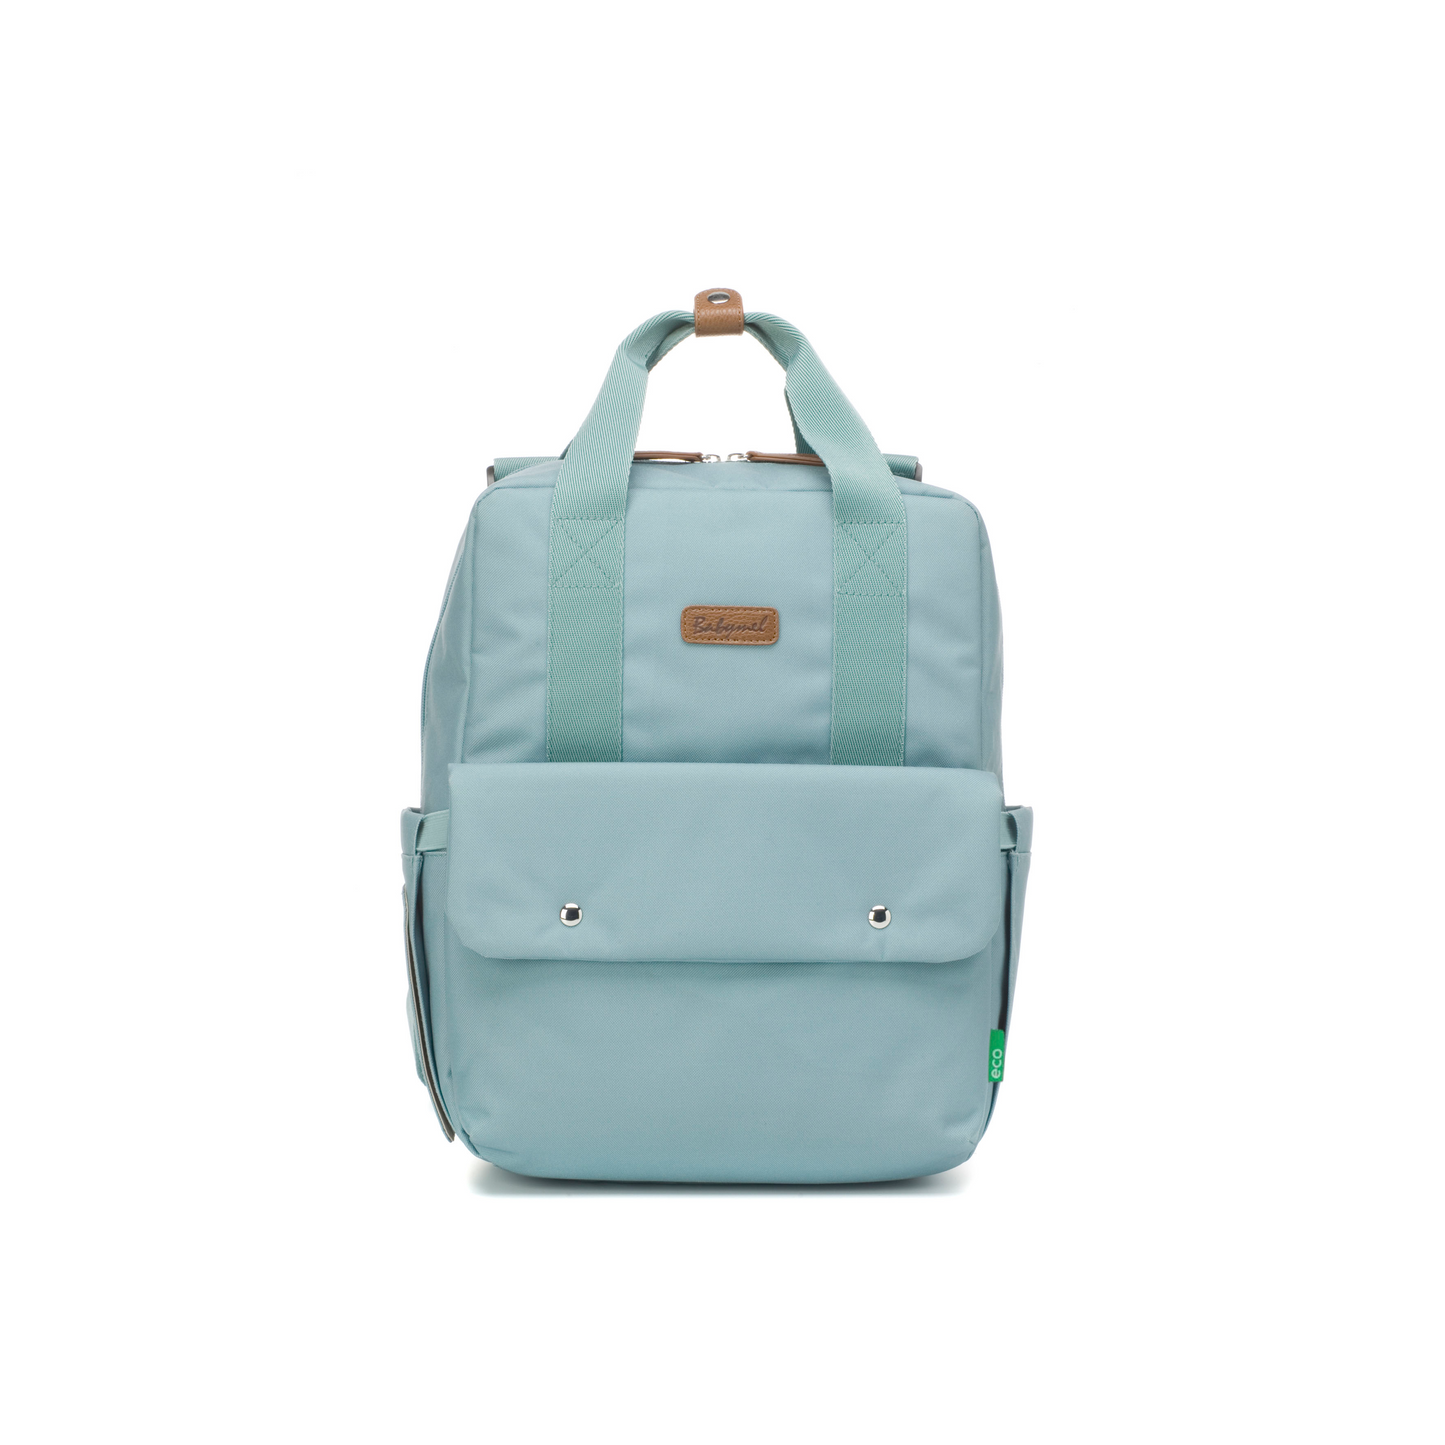 BabyMel Georgi Eco Convertible Backpack